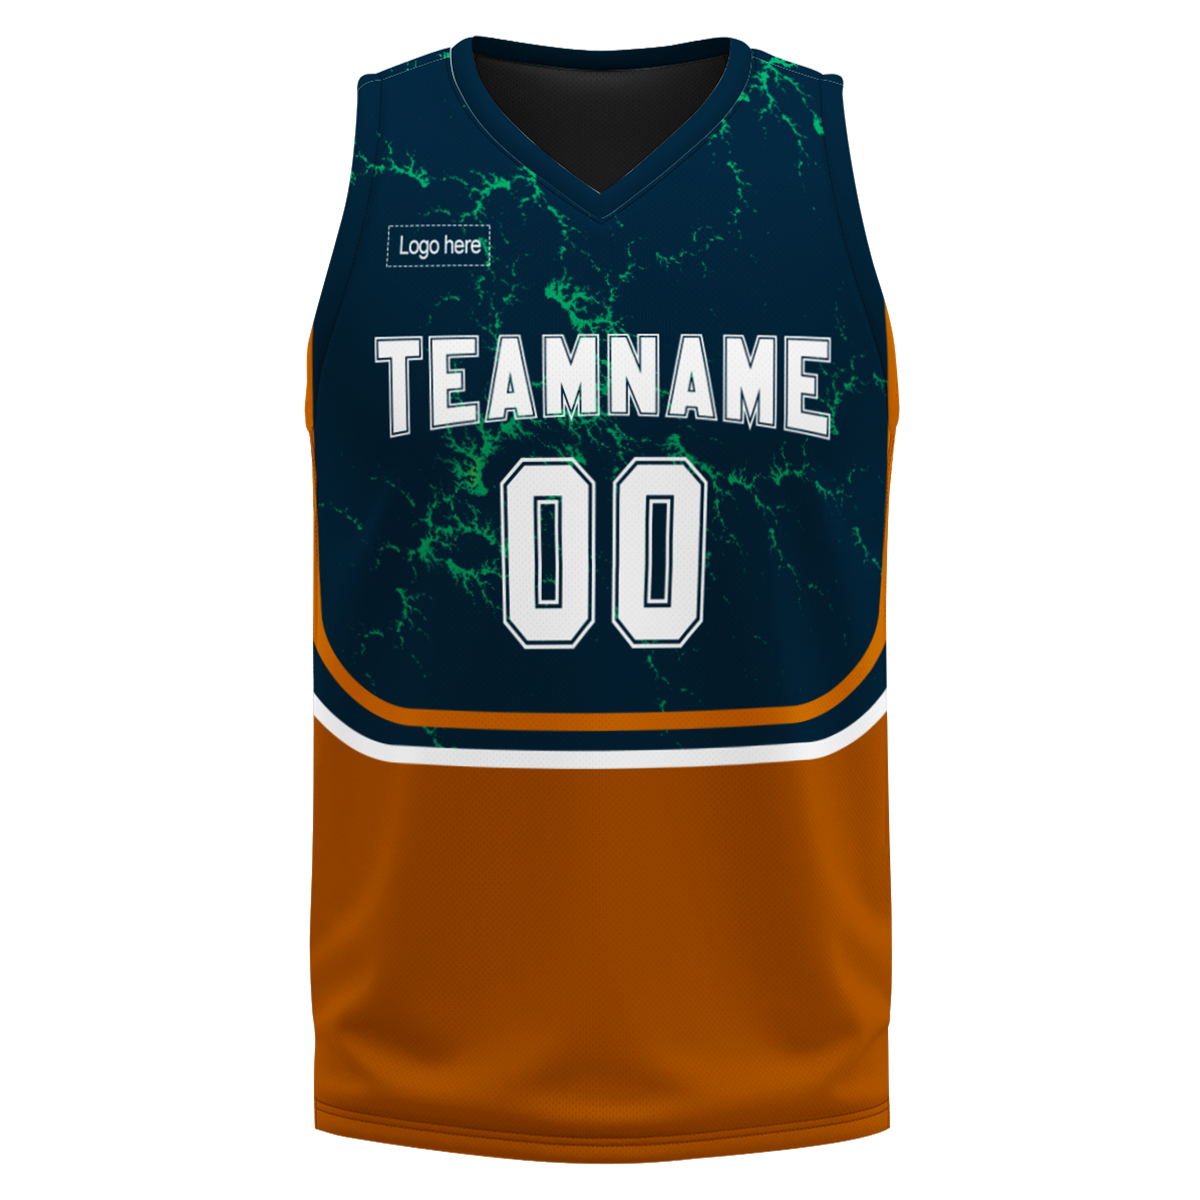 personalized-design-customized-basketball-wear-jersey-uniforms-print-on-demand-training-basketball-suits-at-cj-pod-4